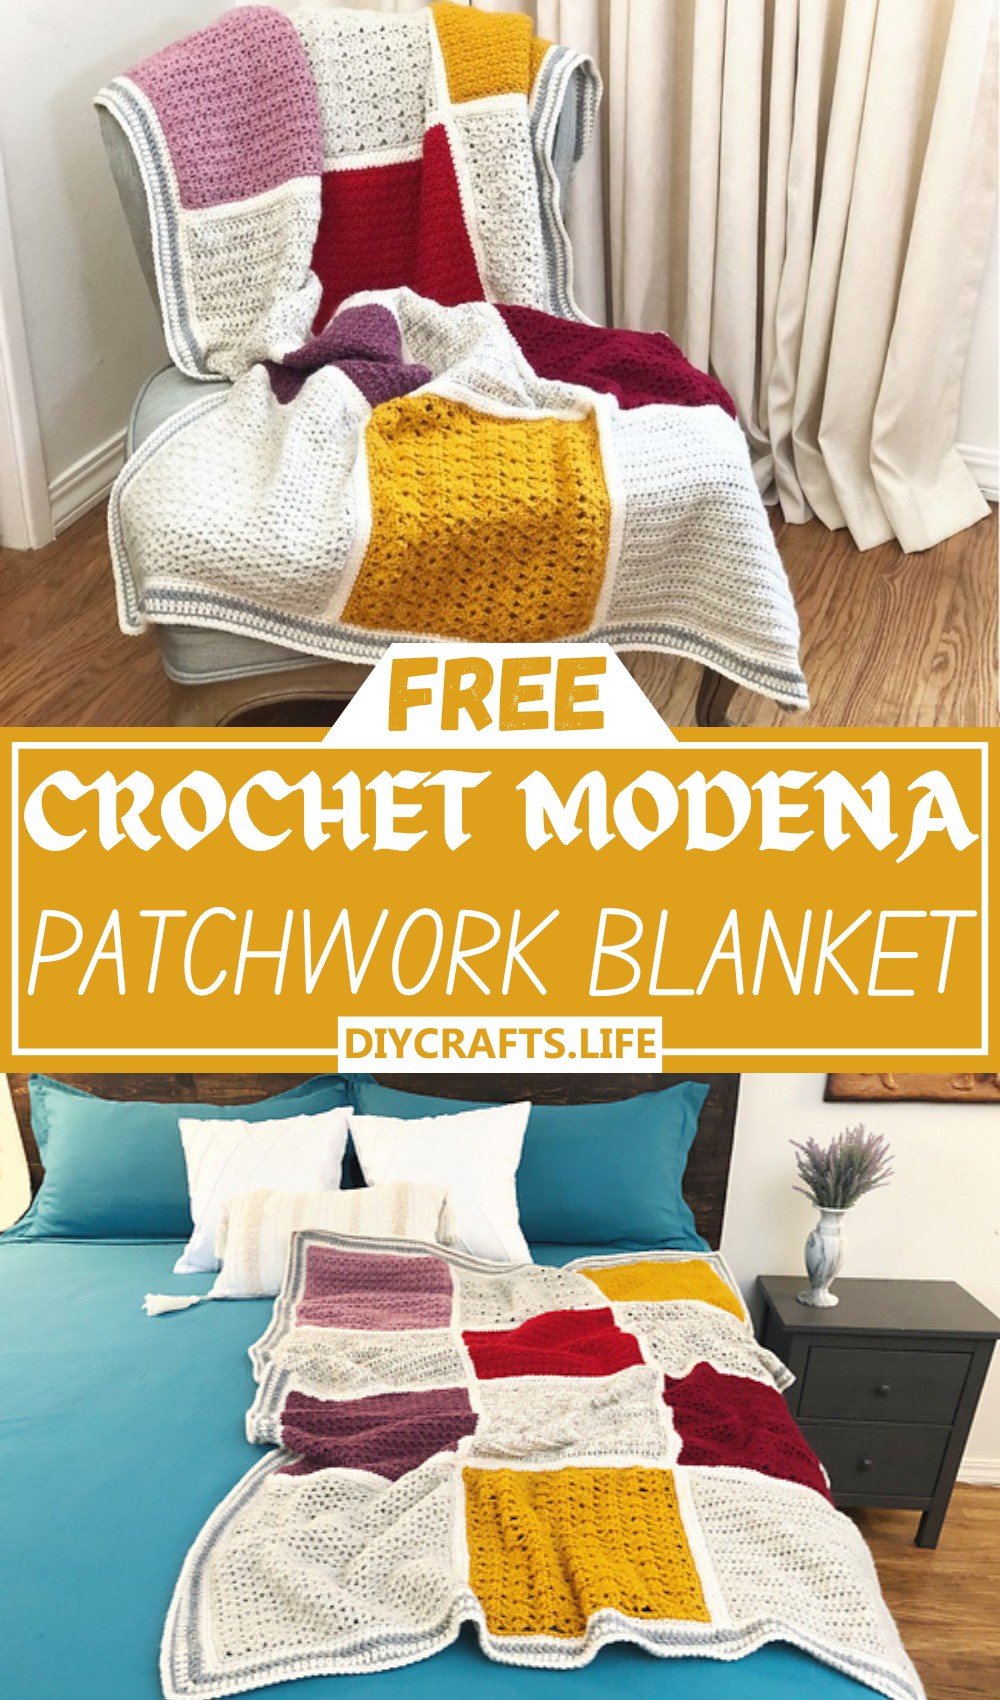 Crochet Modena Patchwork Blanket